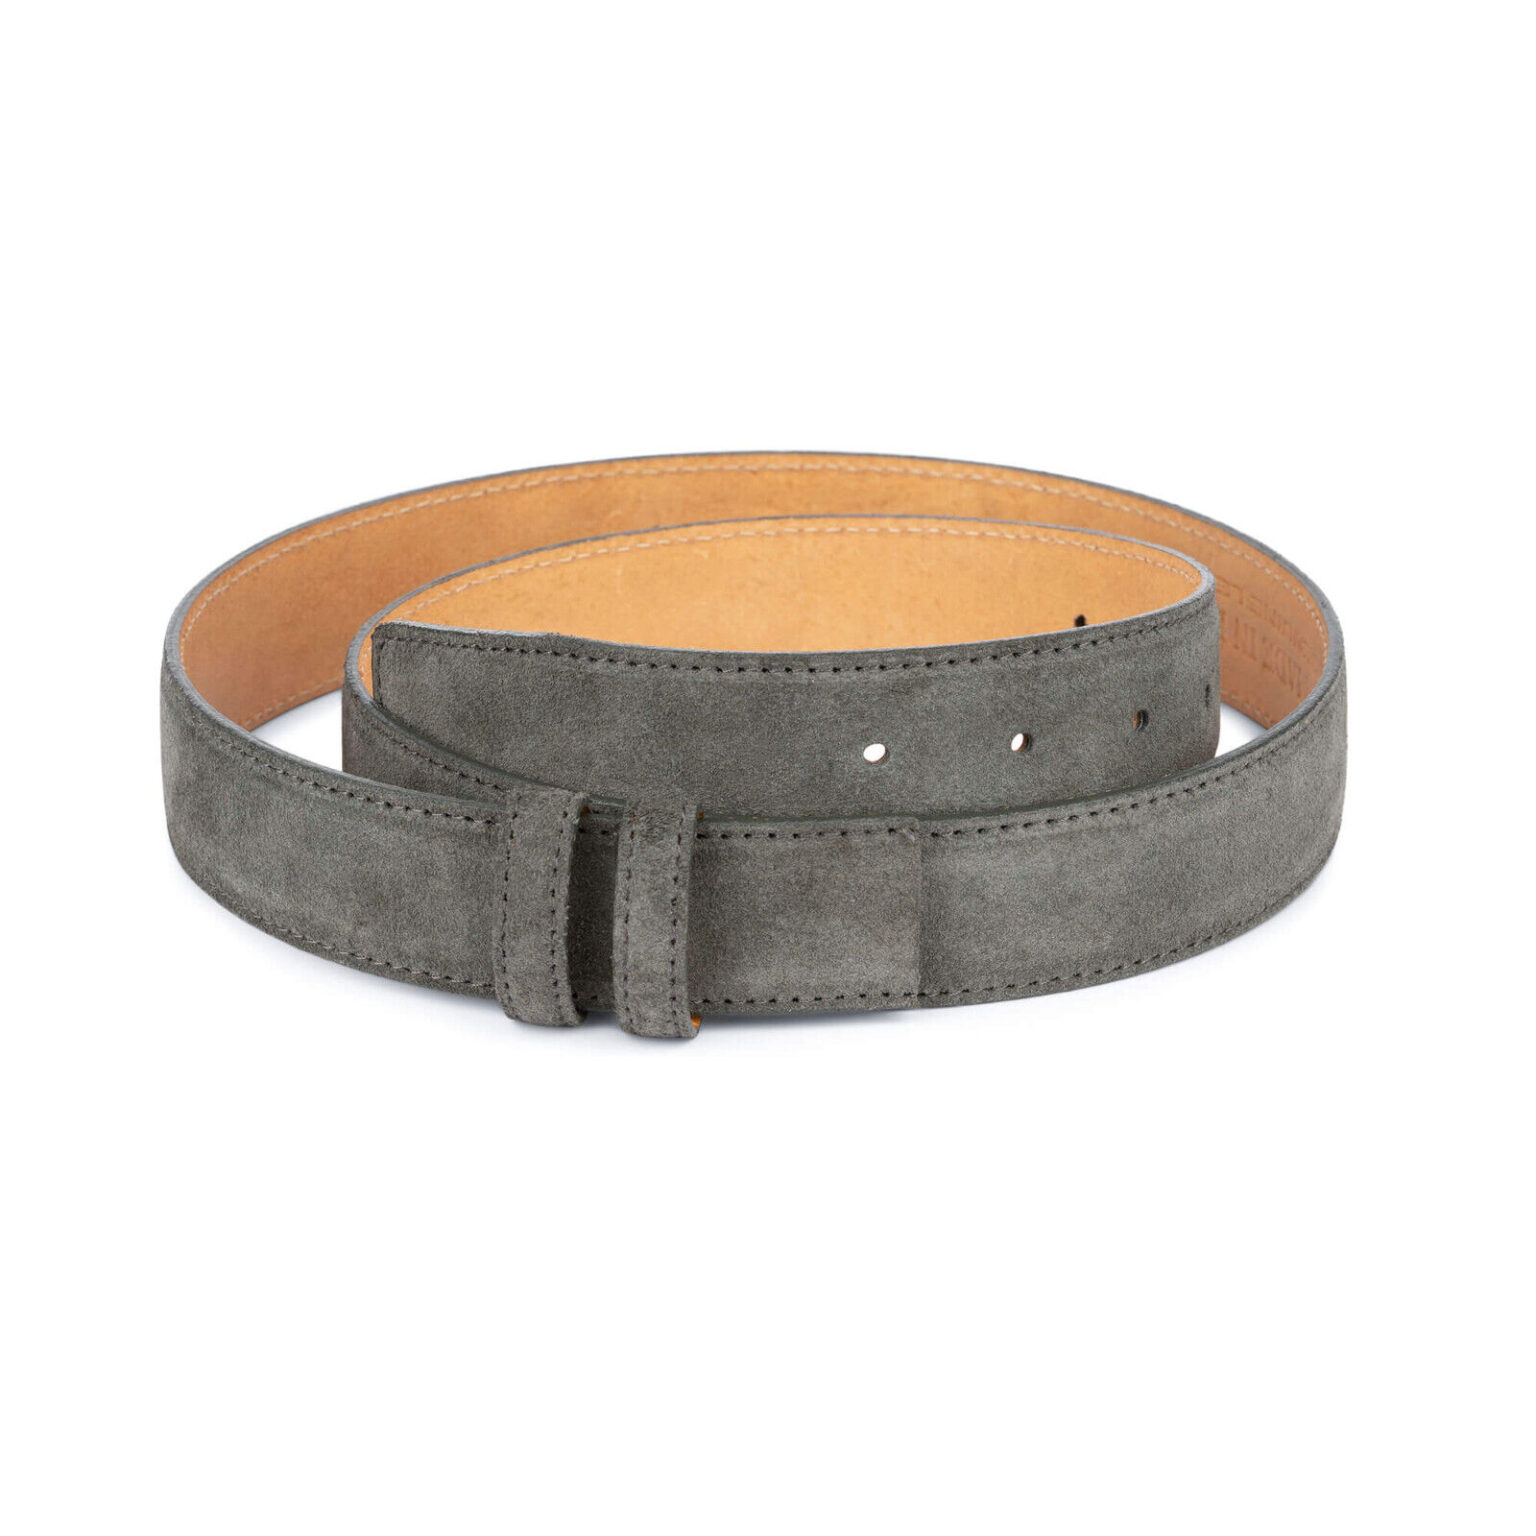 Buy Grey Suede Belt Strap No Buckle | LeatherBeltsOnline.com